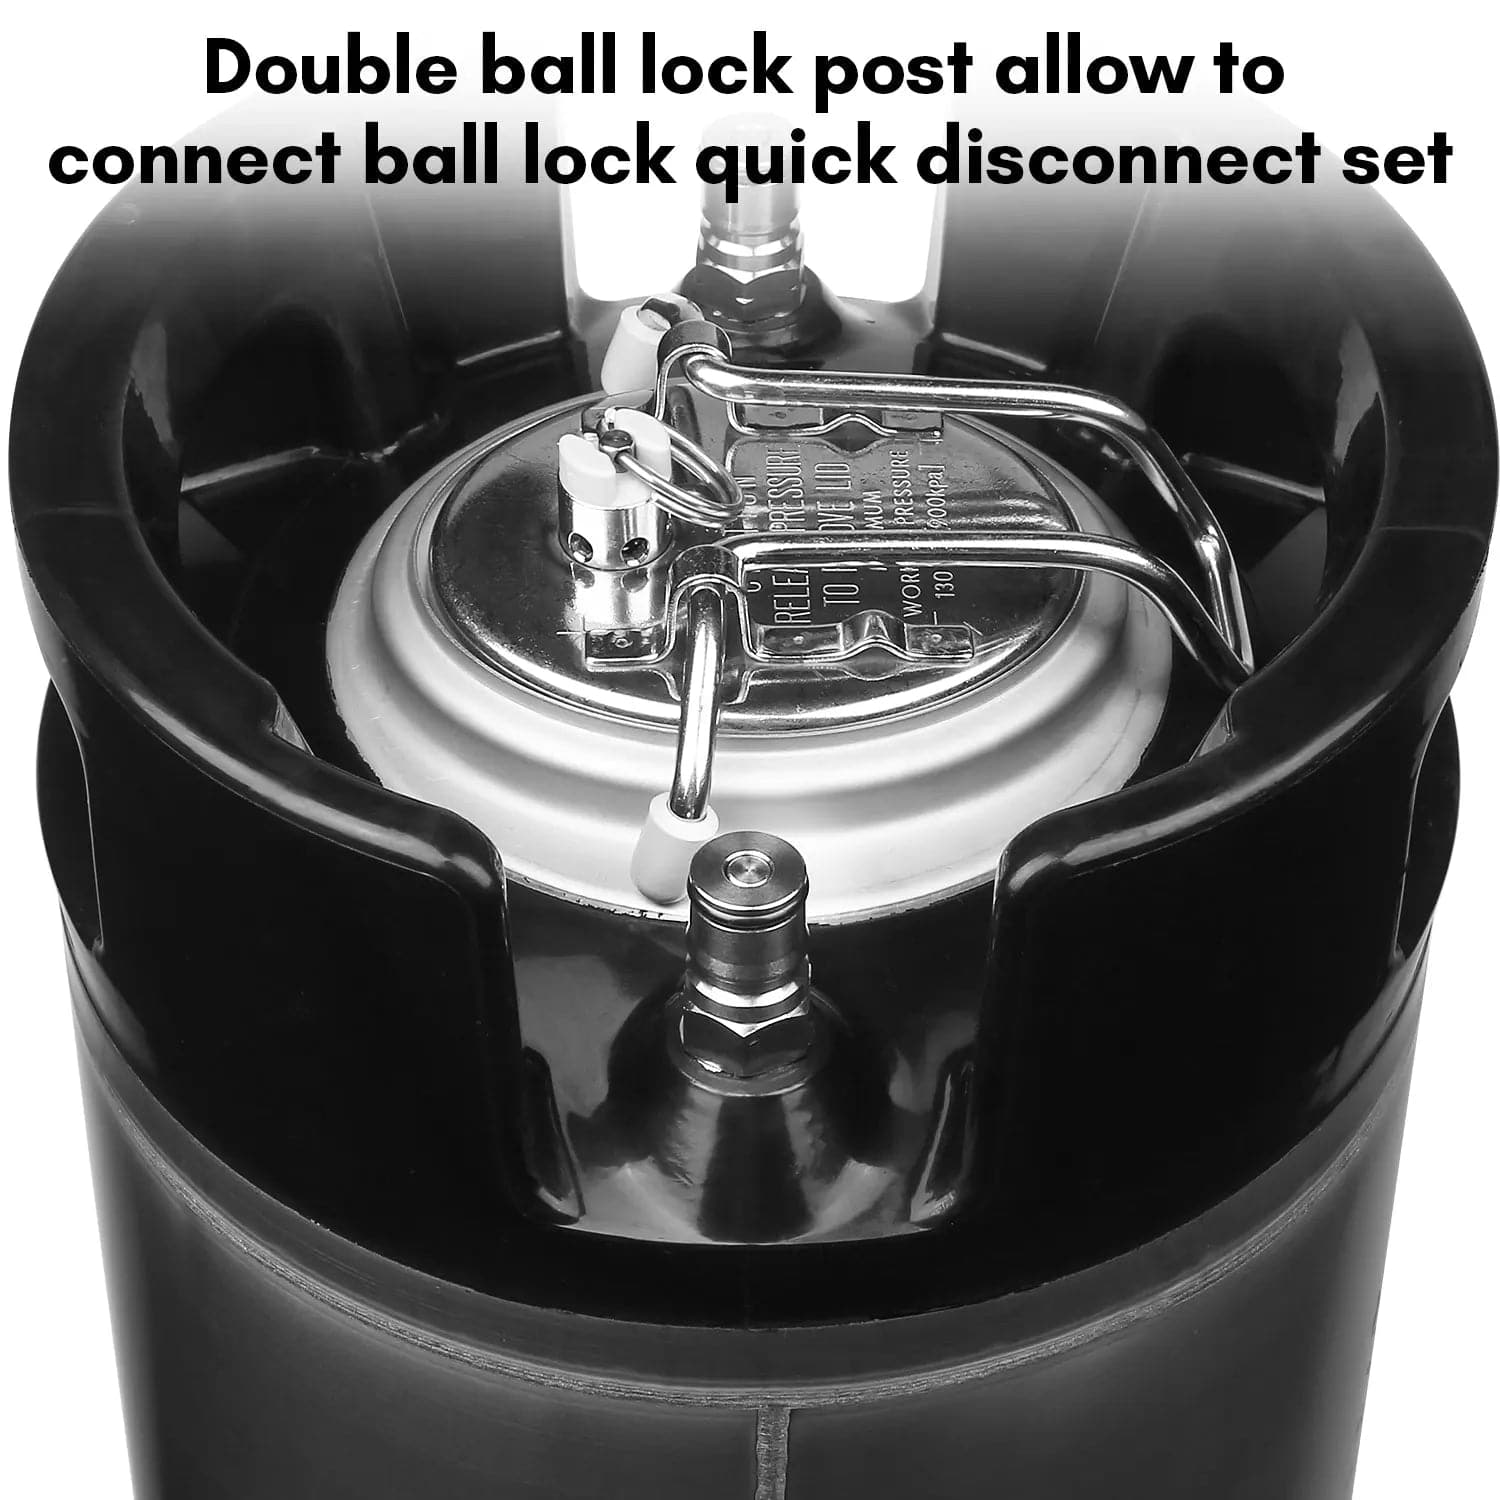 tmcraft 2.5 gallon ball lock keg products details 3